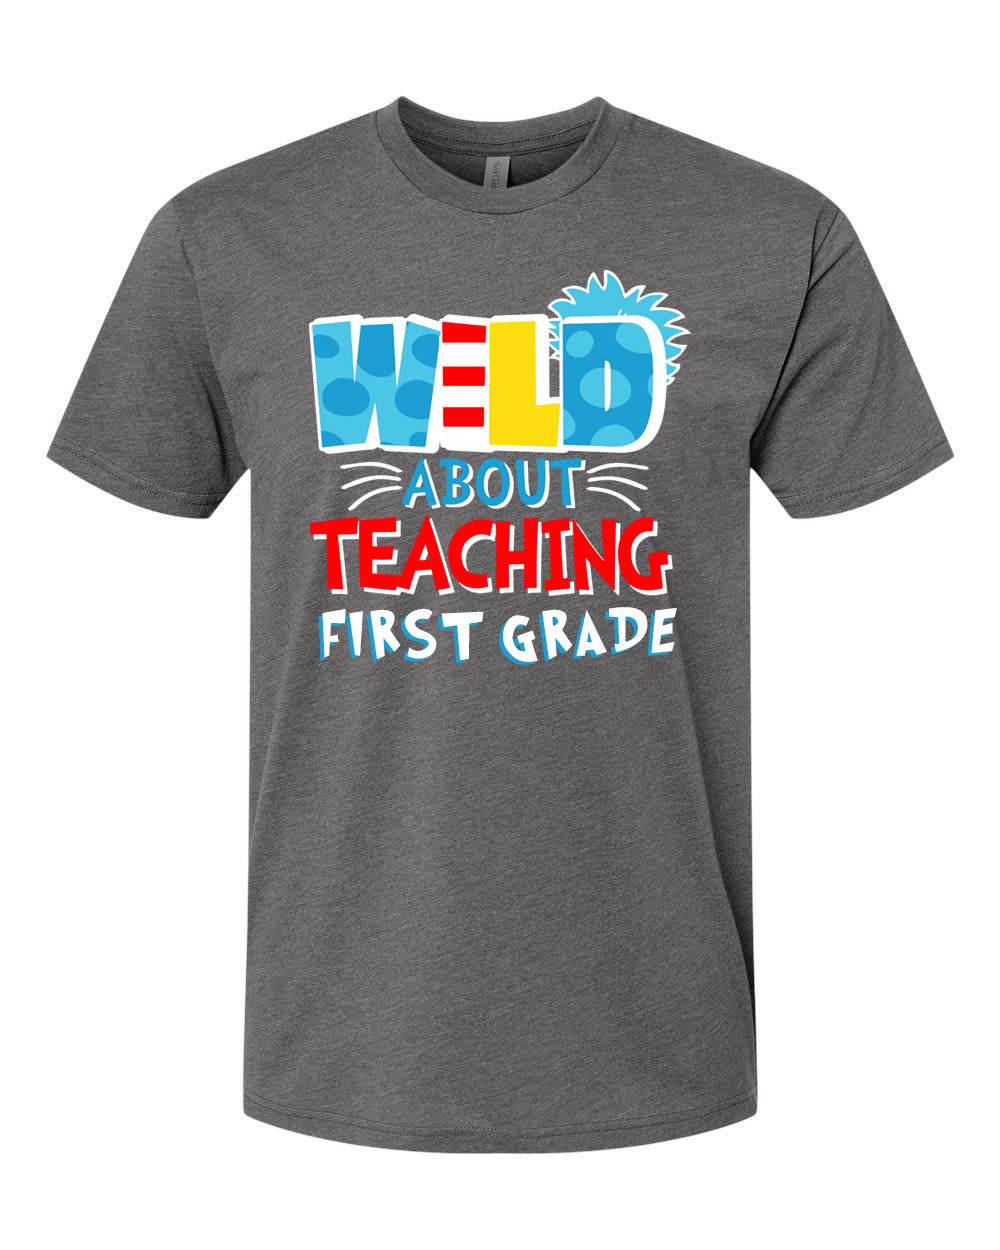 Wild about teaching T-shirt